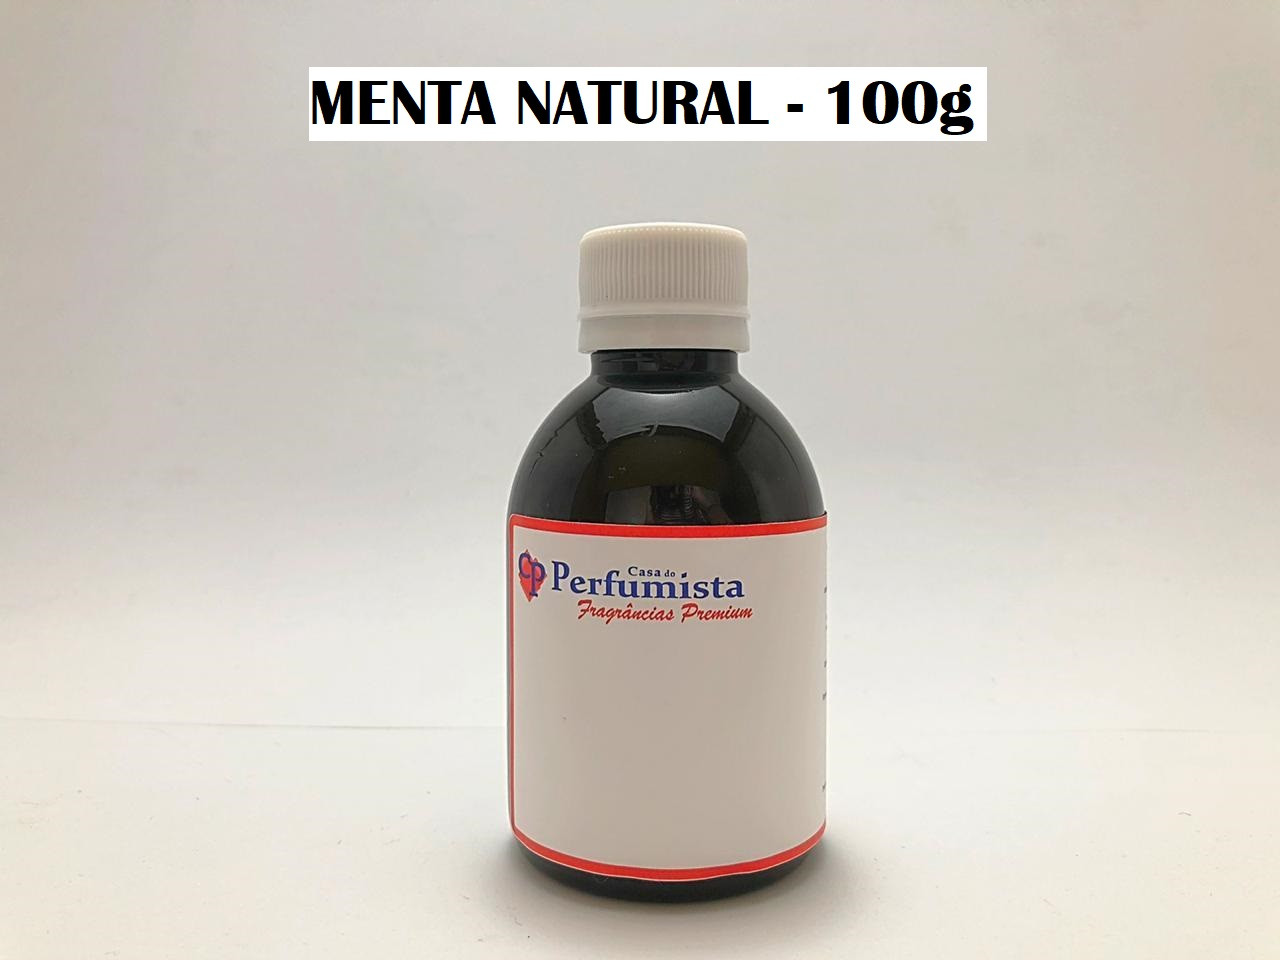 MENTA NATURAL - 100g